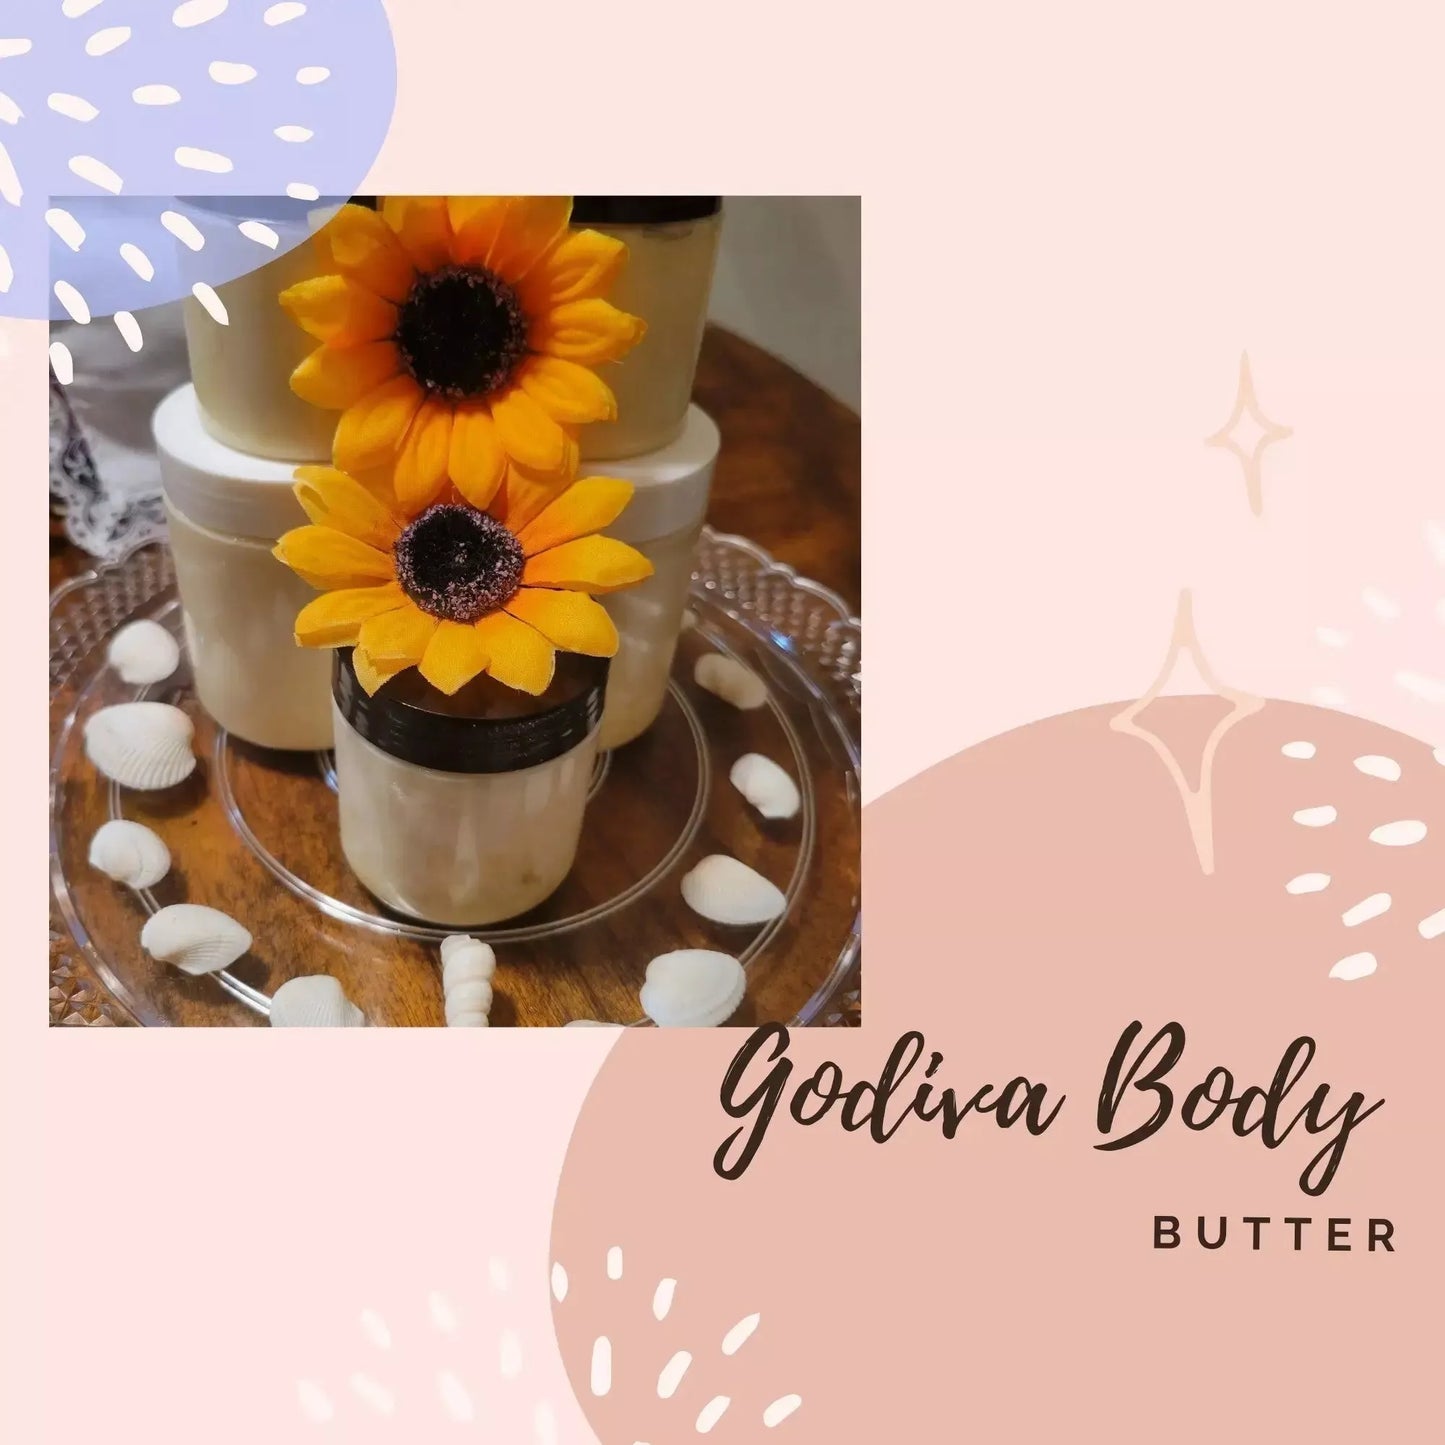 Petal fresh pure body butter. Godiva Body Butter - Godiva Oya Bey